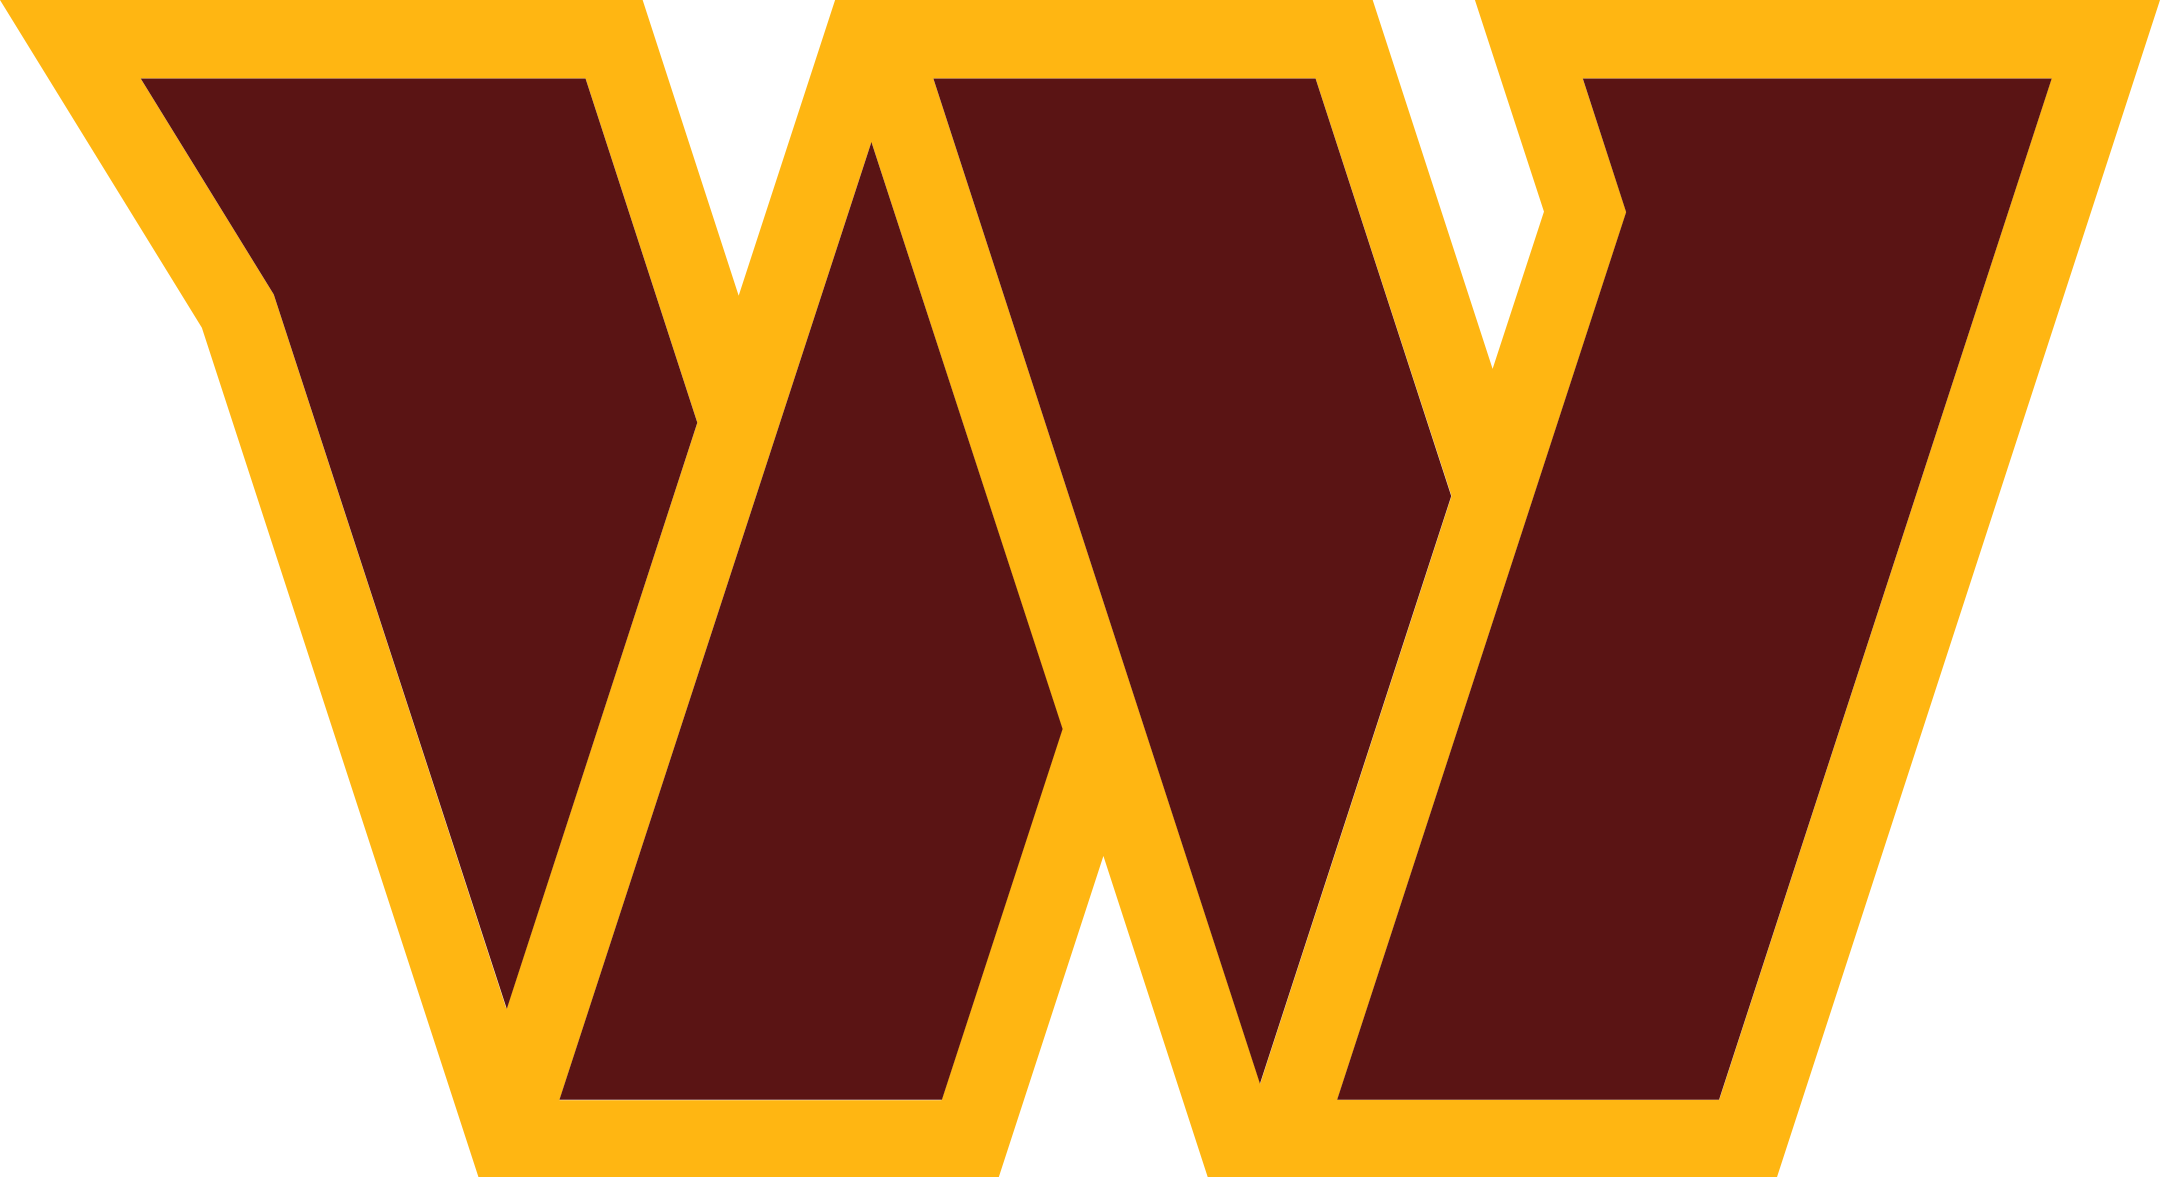 washington commanders logo 1 - Washington Commanders Logo